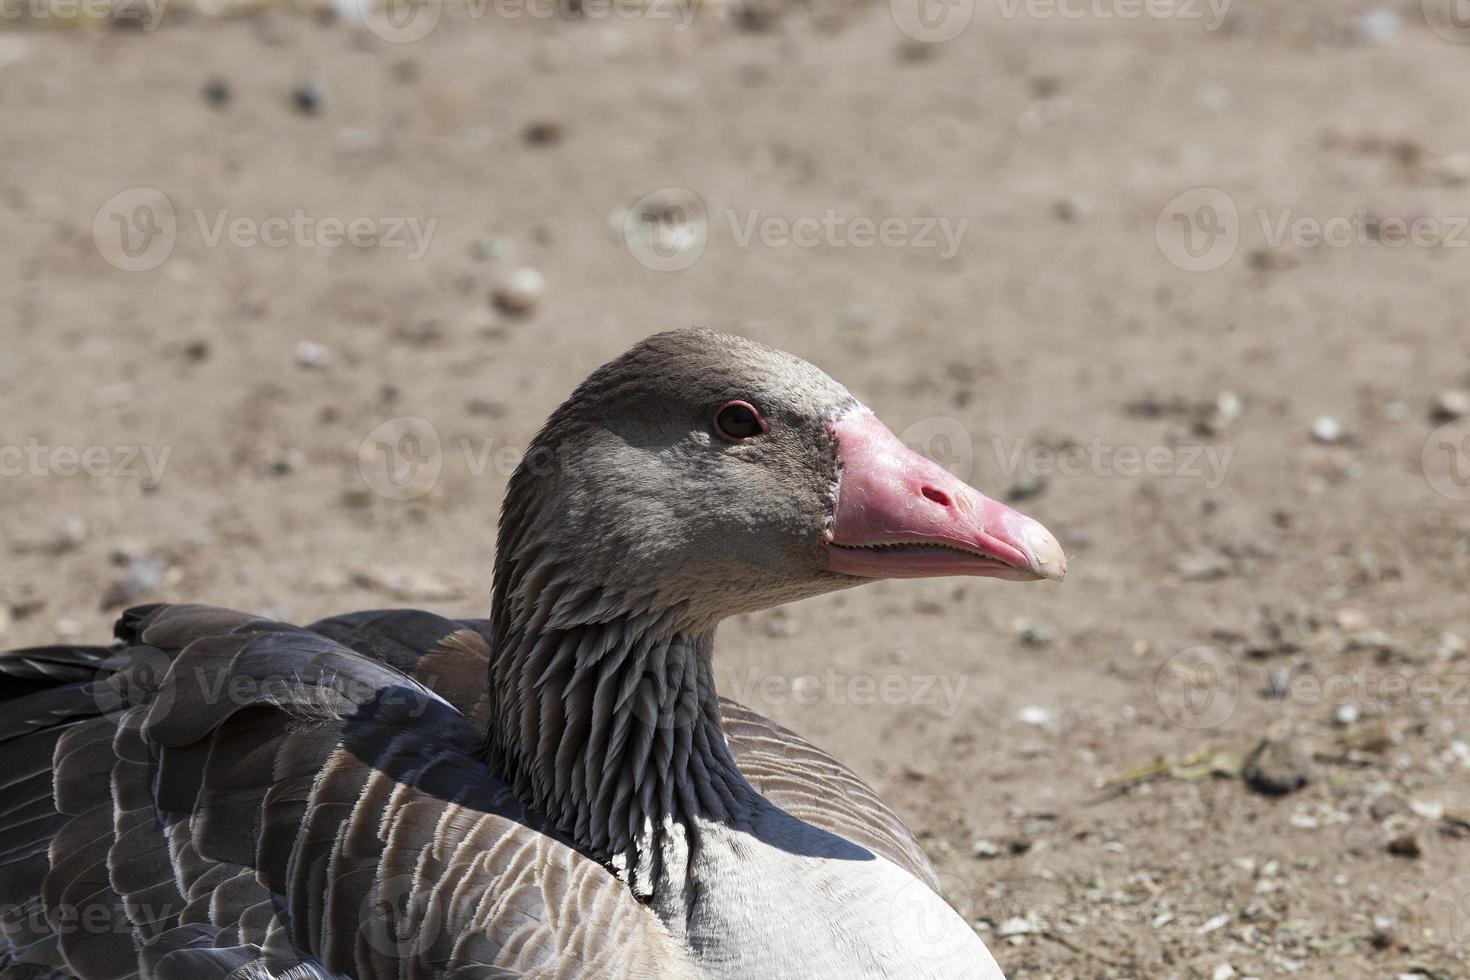 sitting duck, close up photo